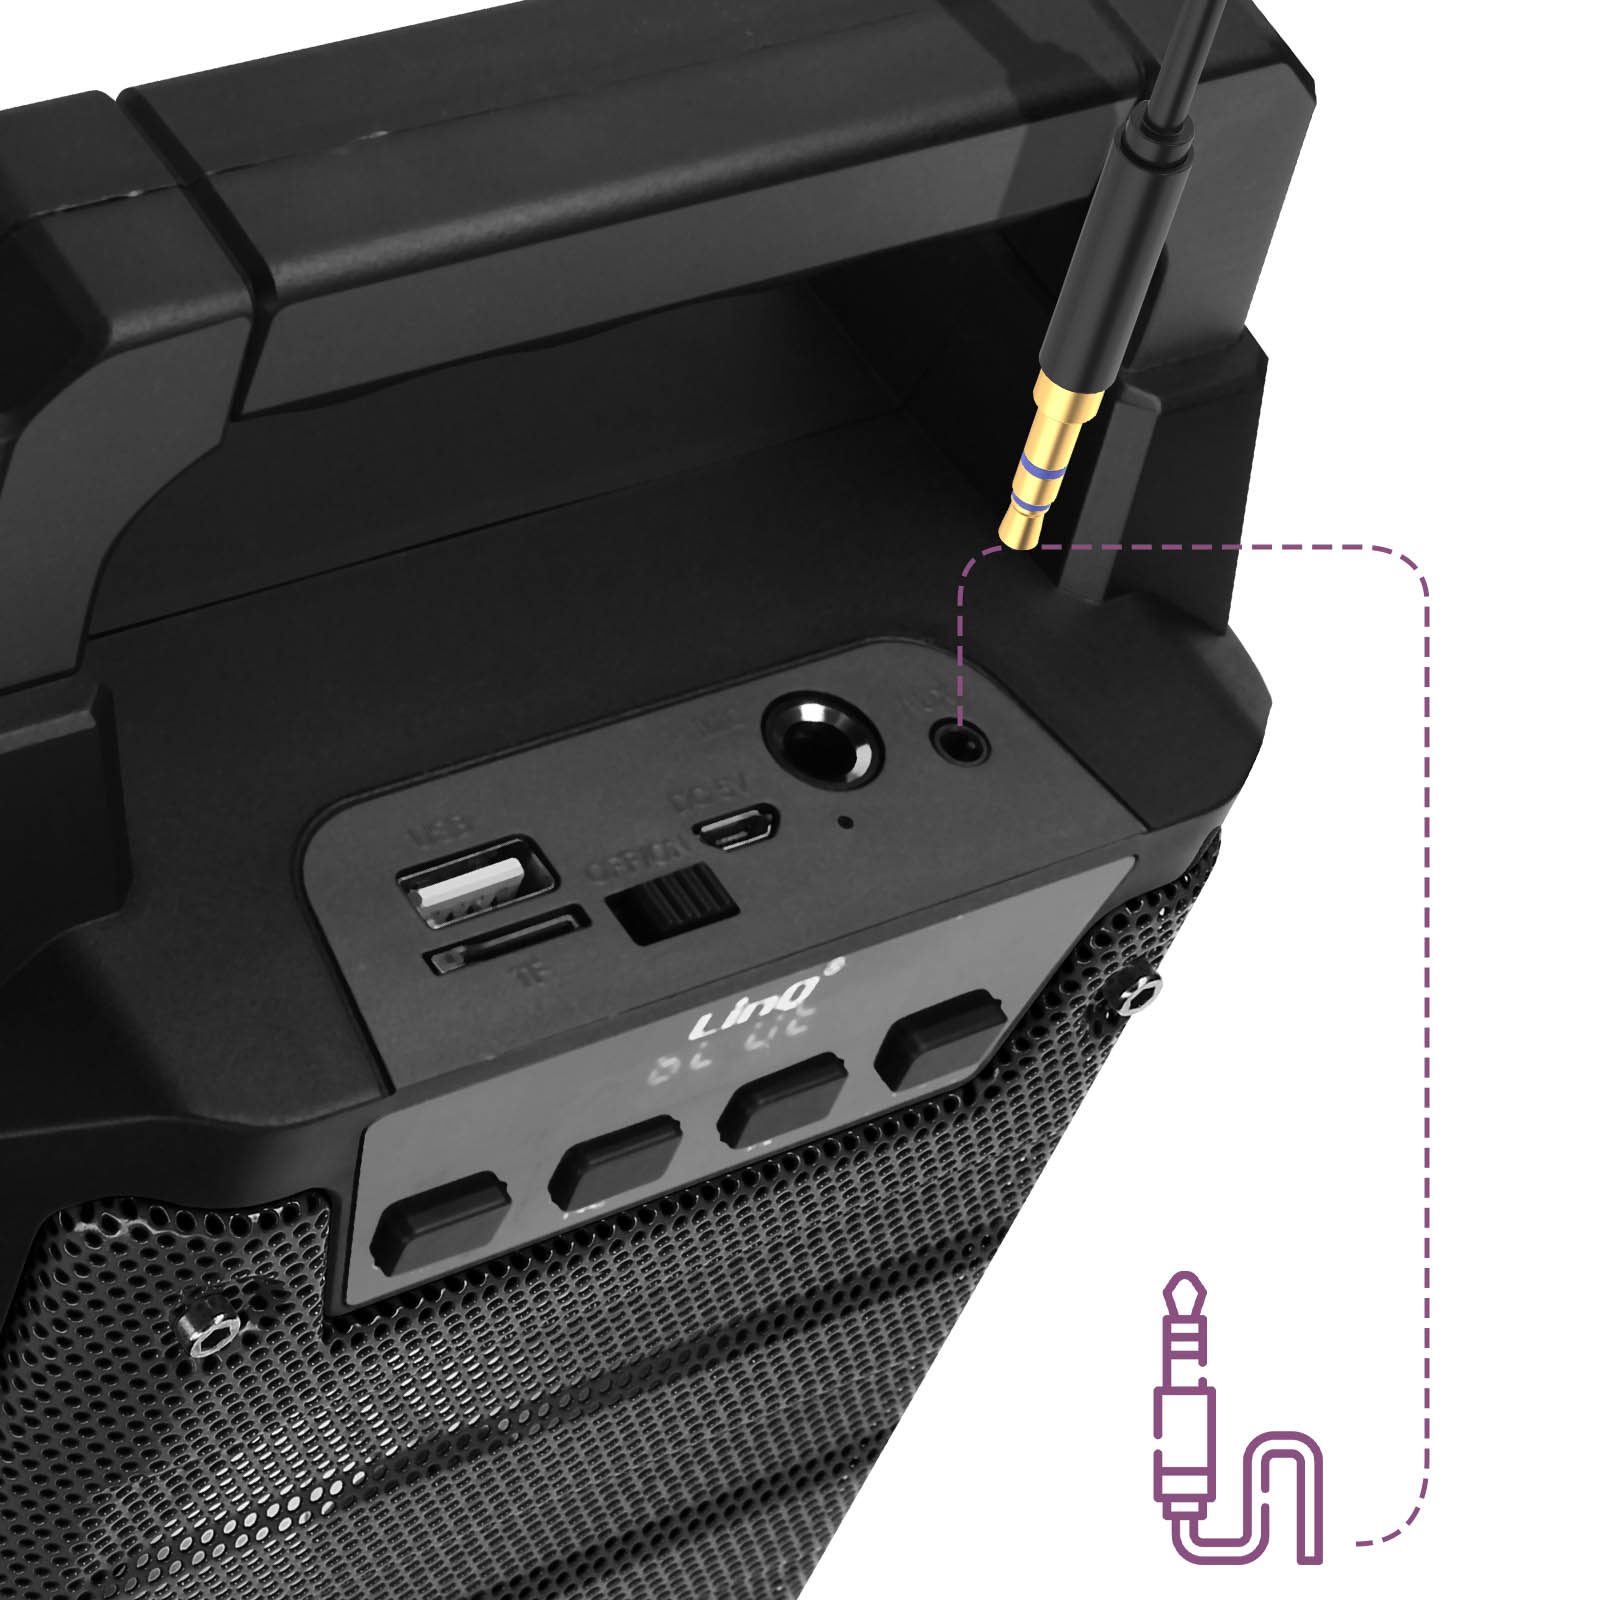 Enceinte lumineuse Noir Bluetooth Compatible Micro, LinQ - Enceinte